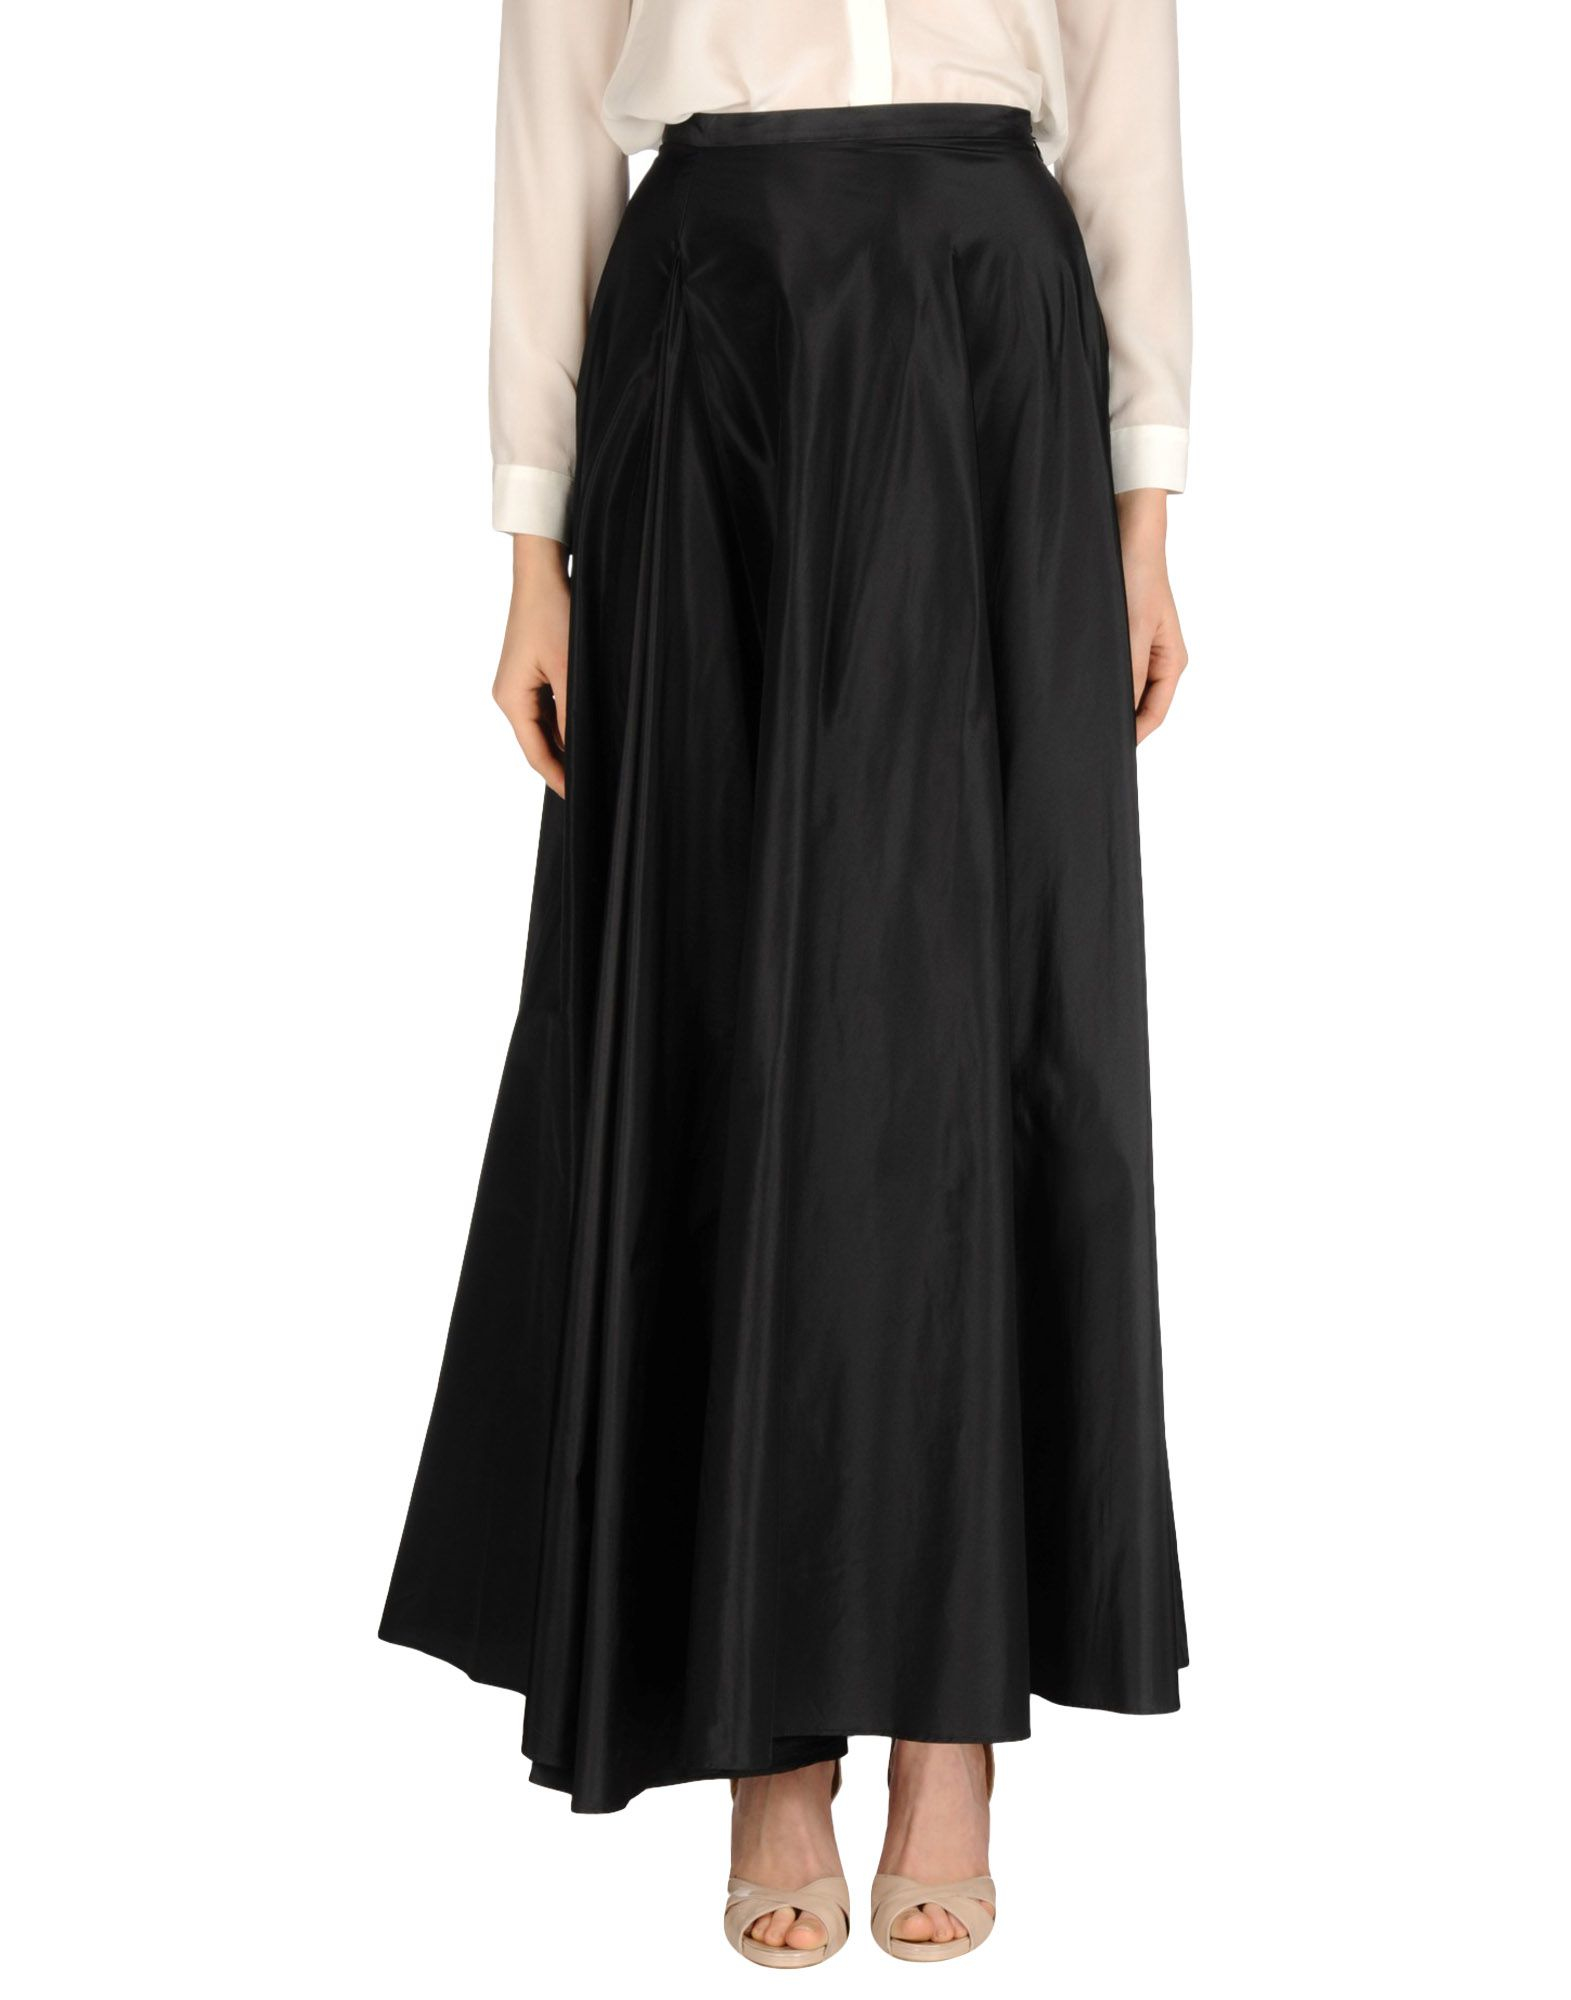 Max Mara Silk Long Skirt in Black - Lyst